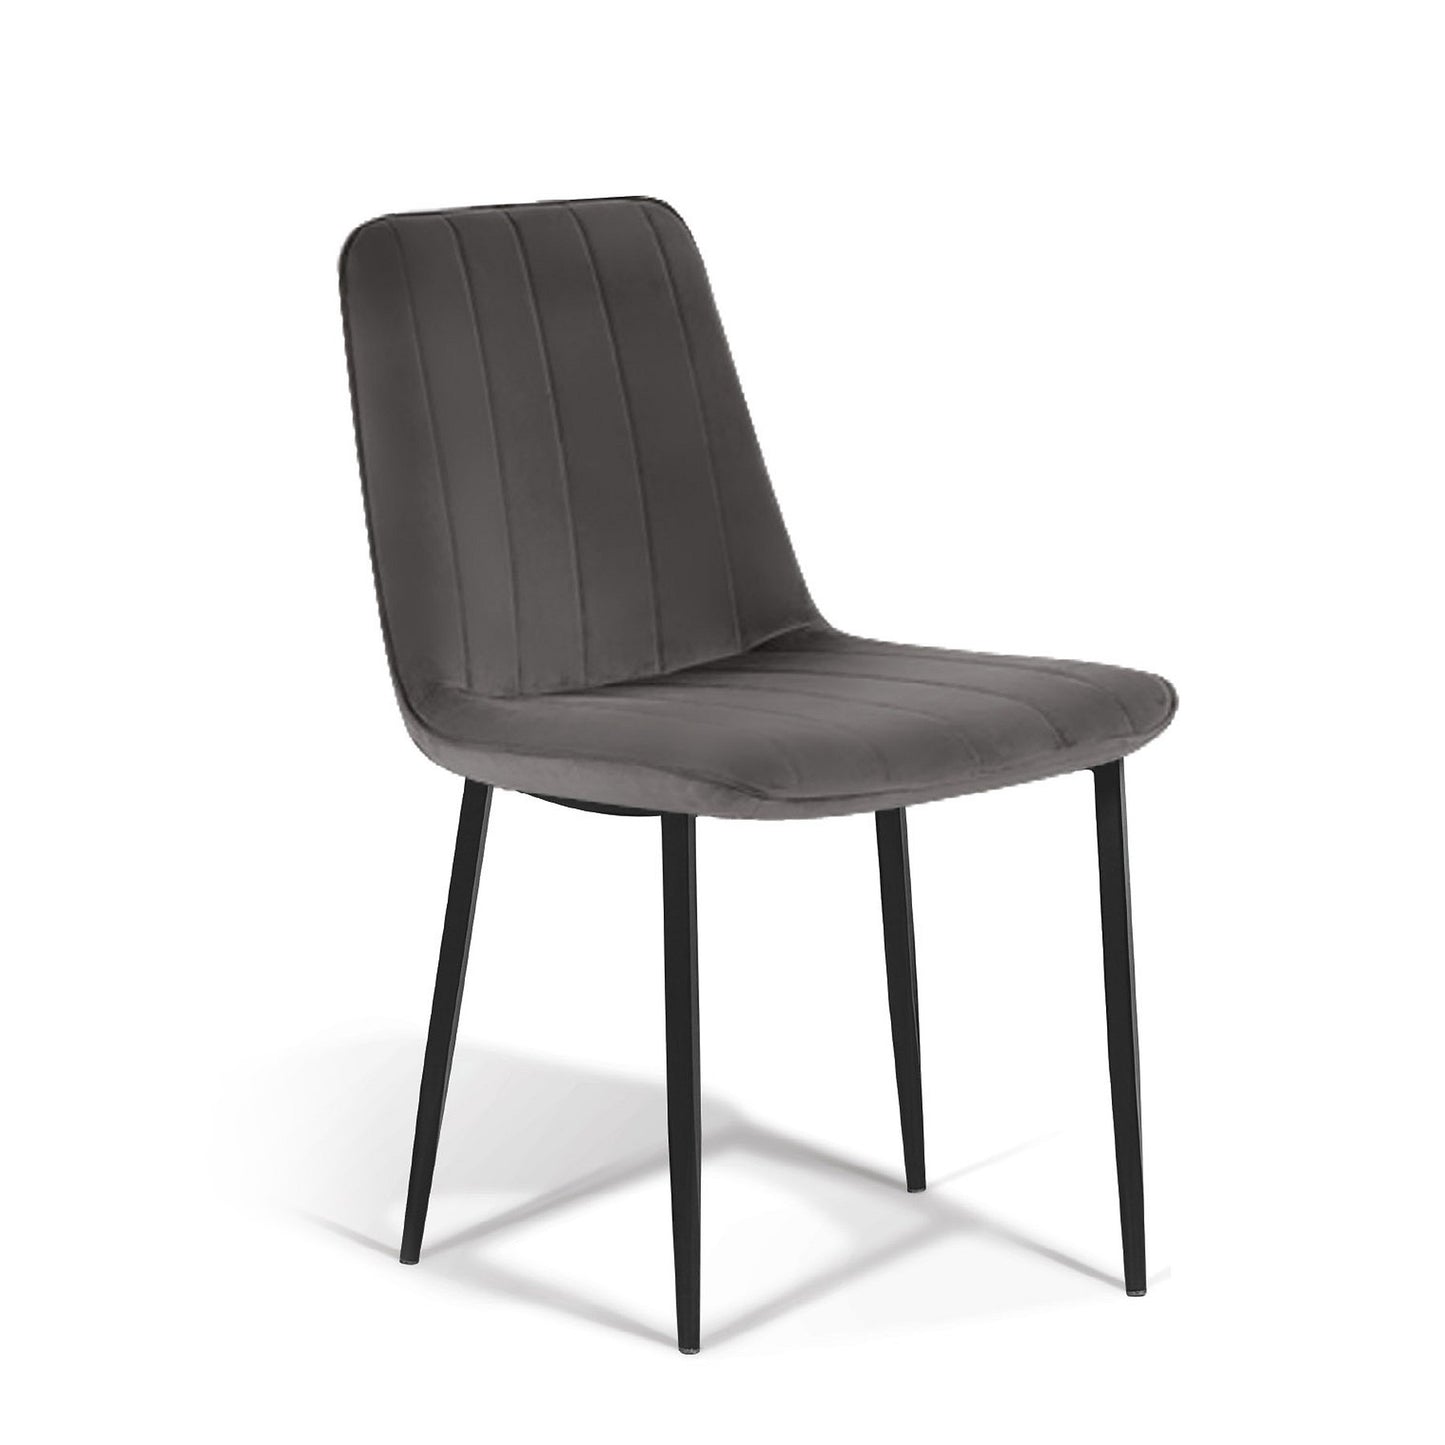 SEF323510 rimini - dining chair - Dreamart Gallery